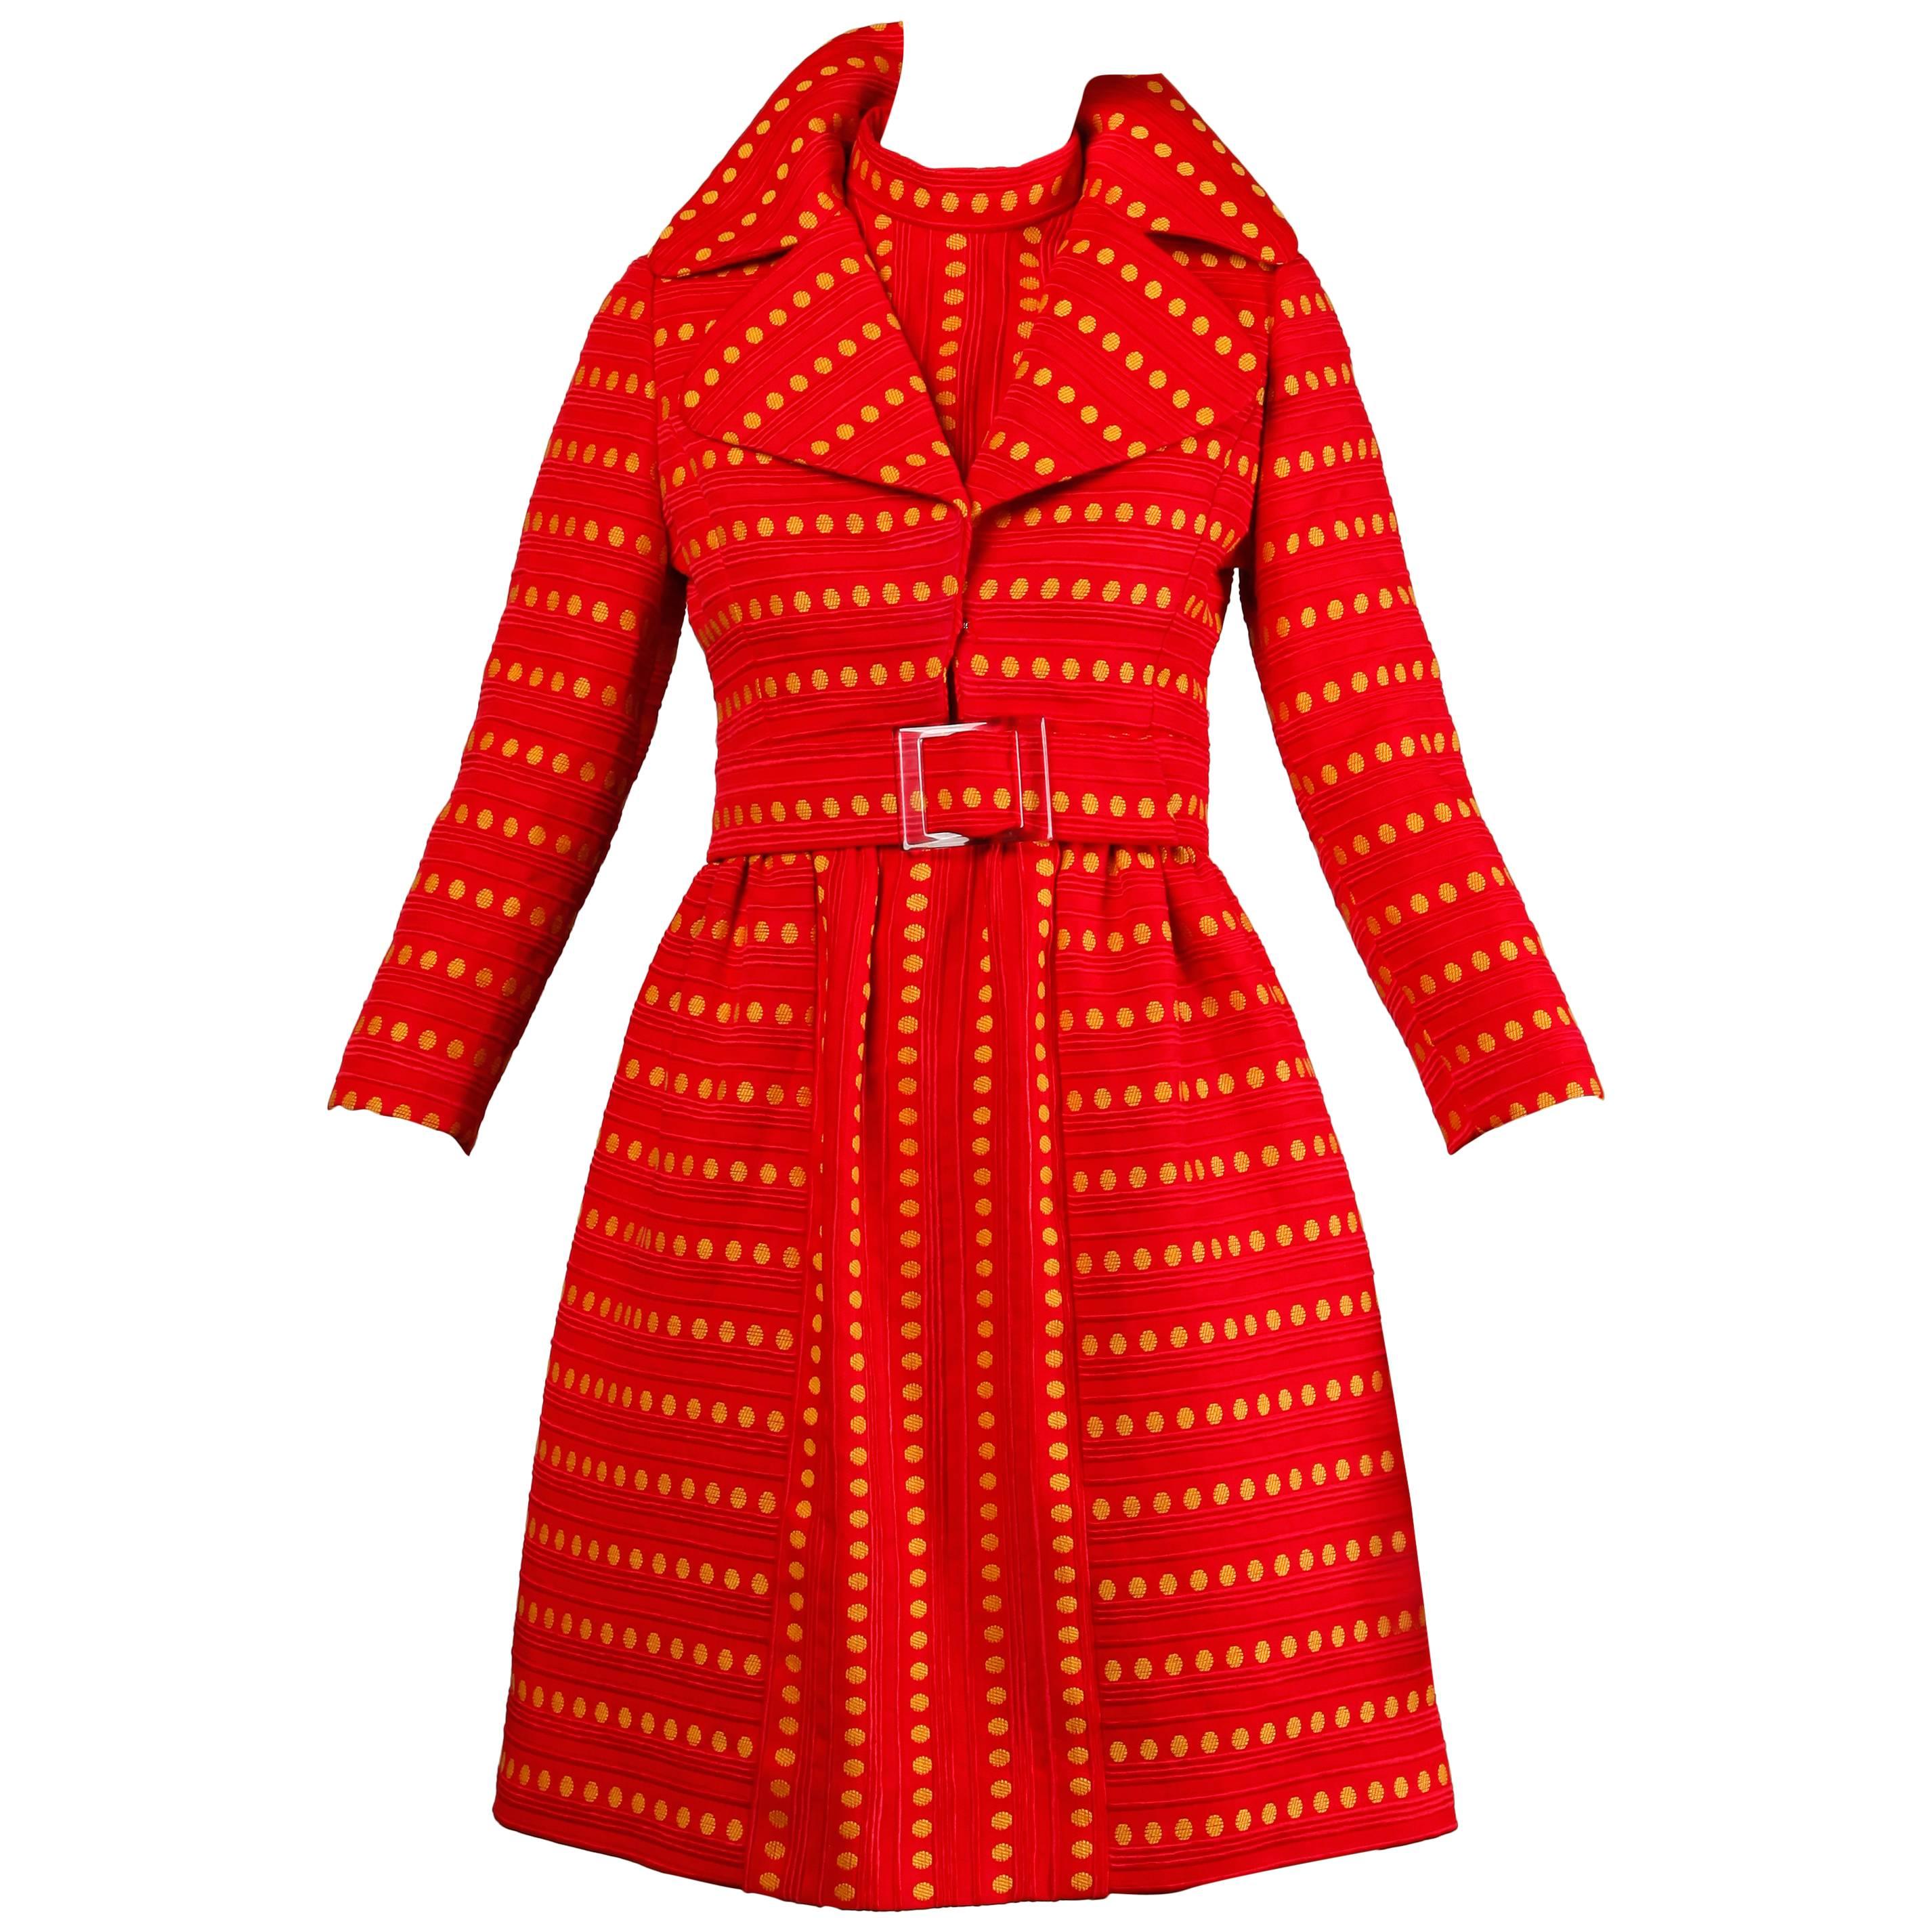 Rare Kreinick 1960s Vintage Red + Yellow Polka Dot Mod Dress + Jacket Ensemble